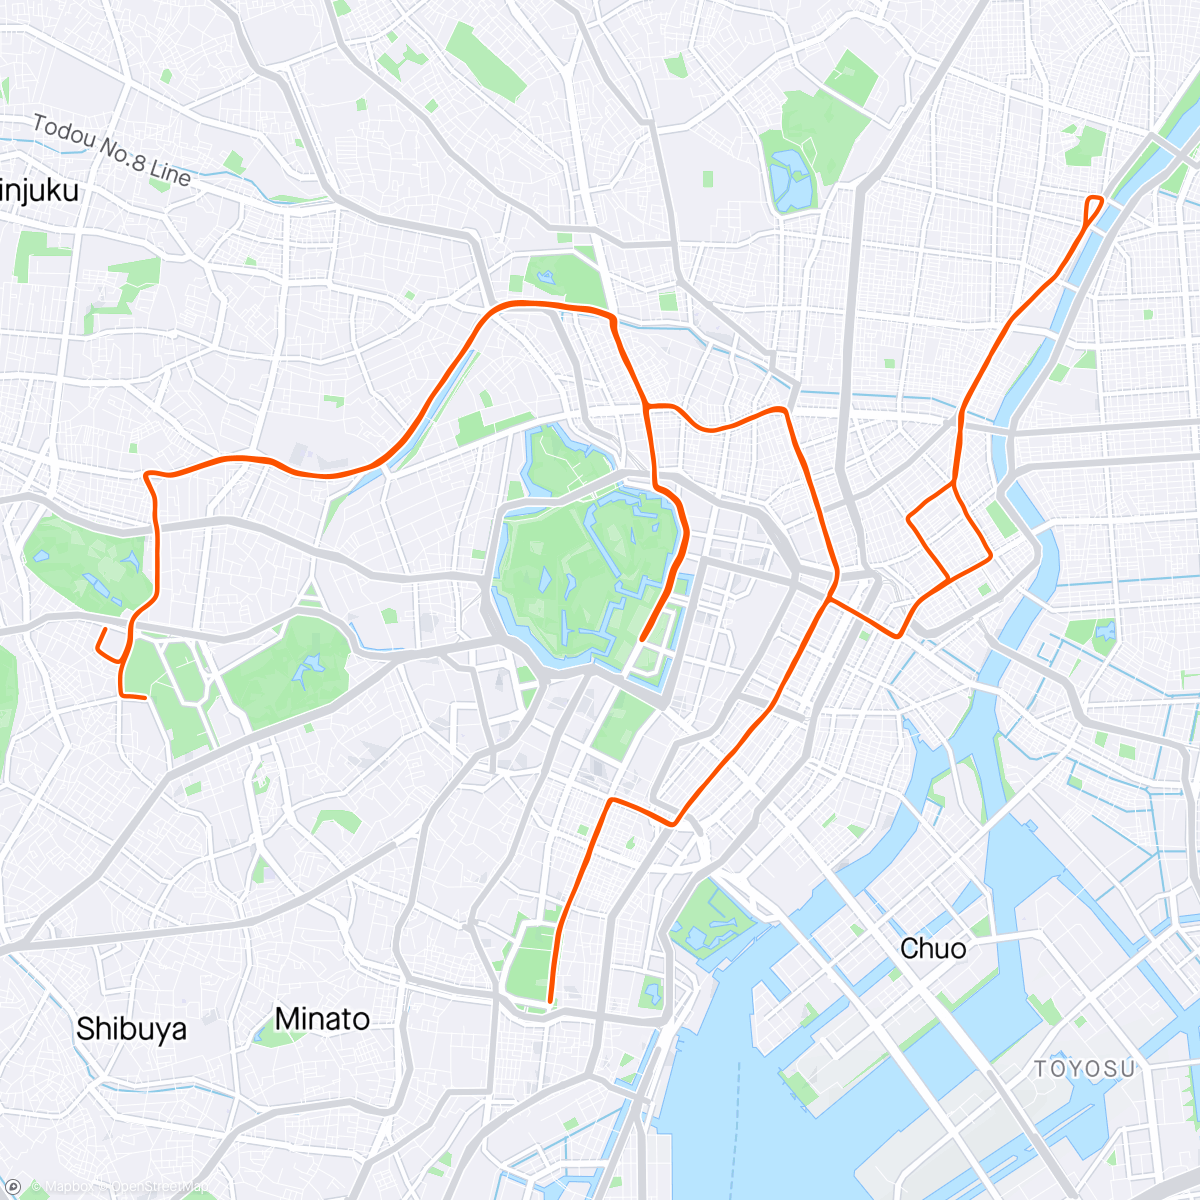 「ROUVY - Tokyo - 42 km | Japan」活動的地圖